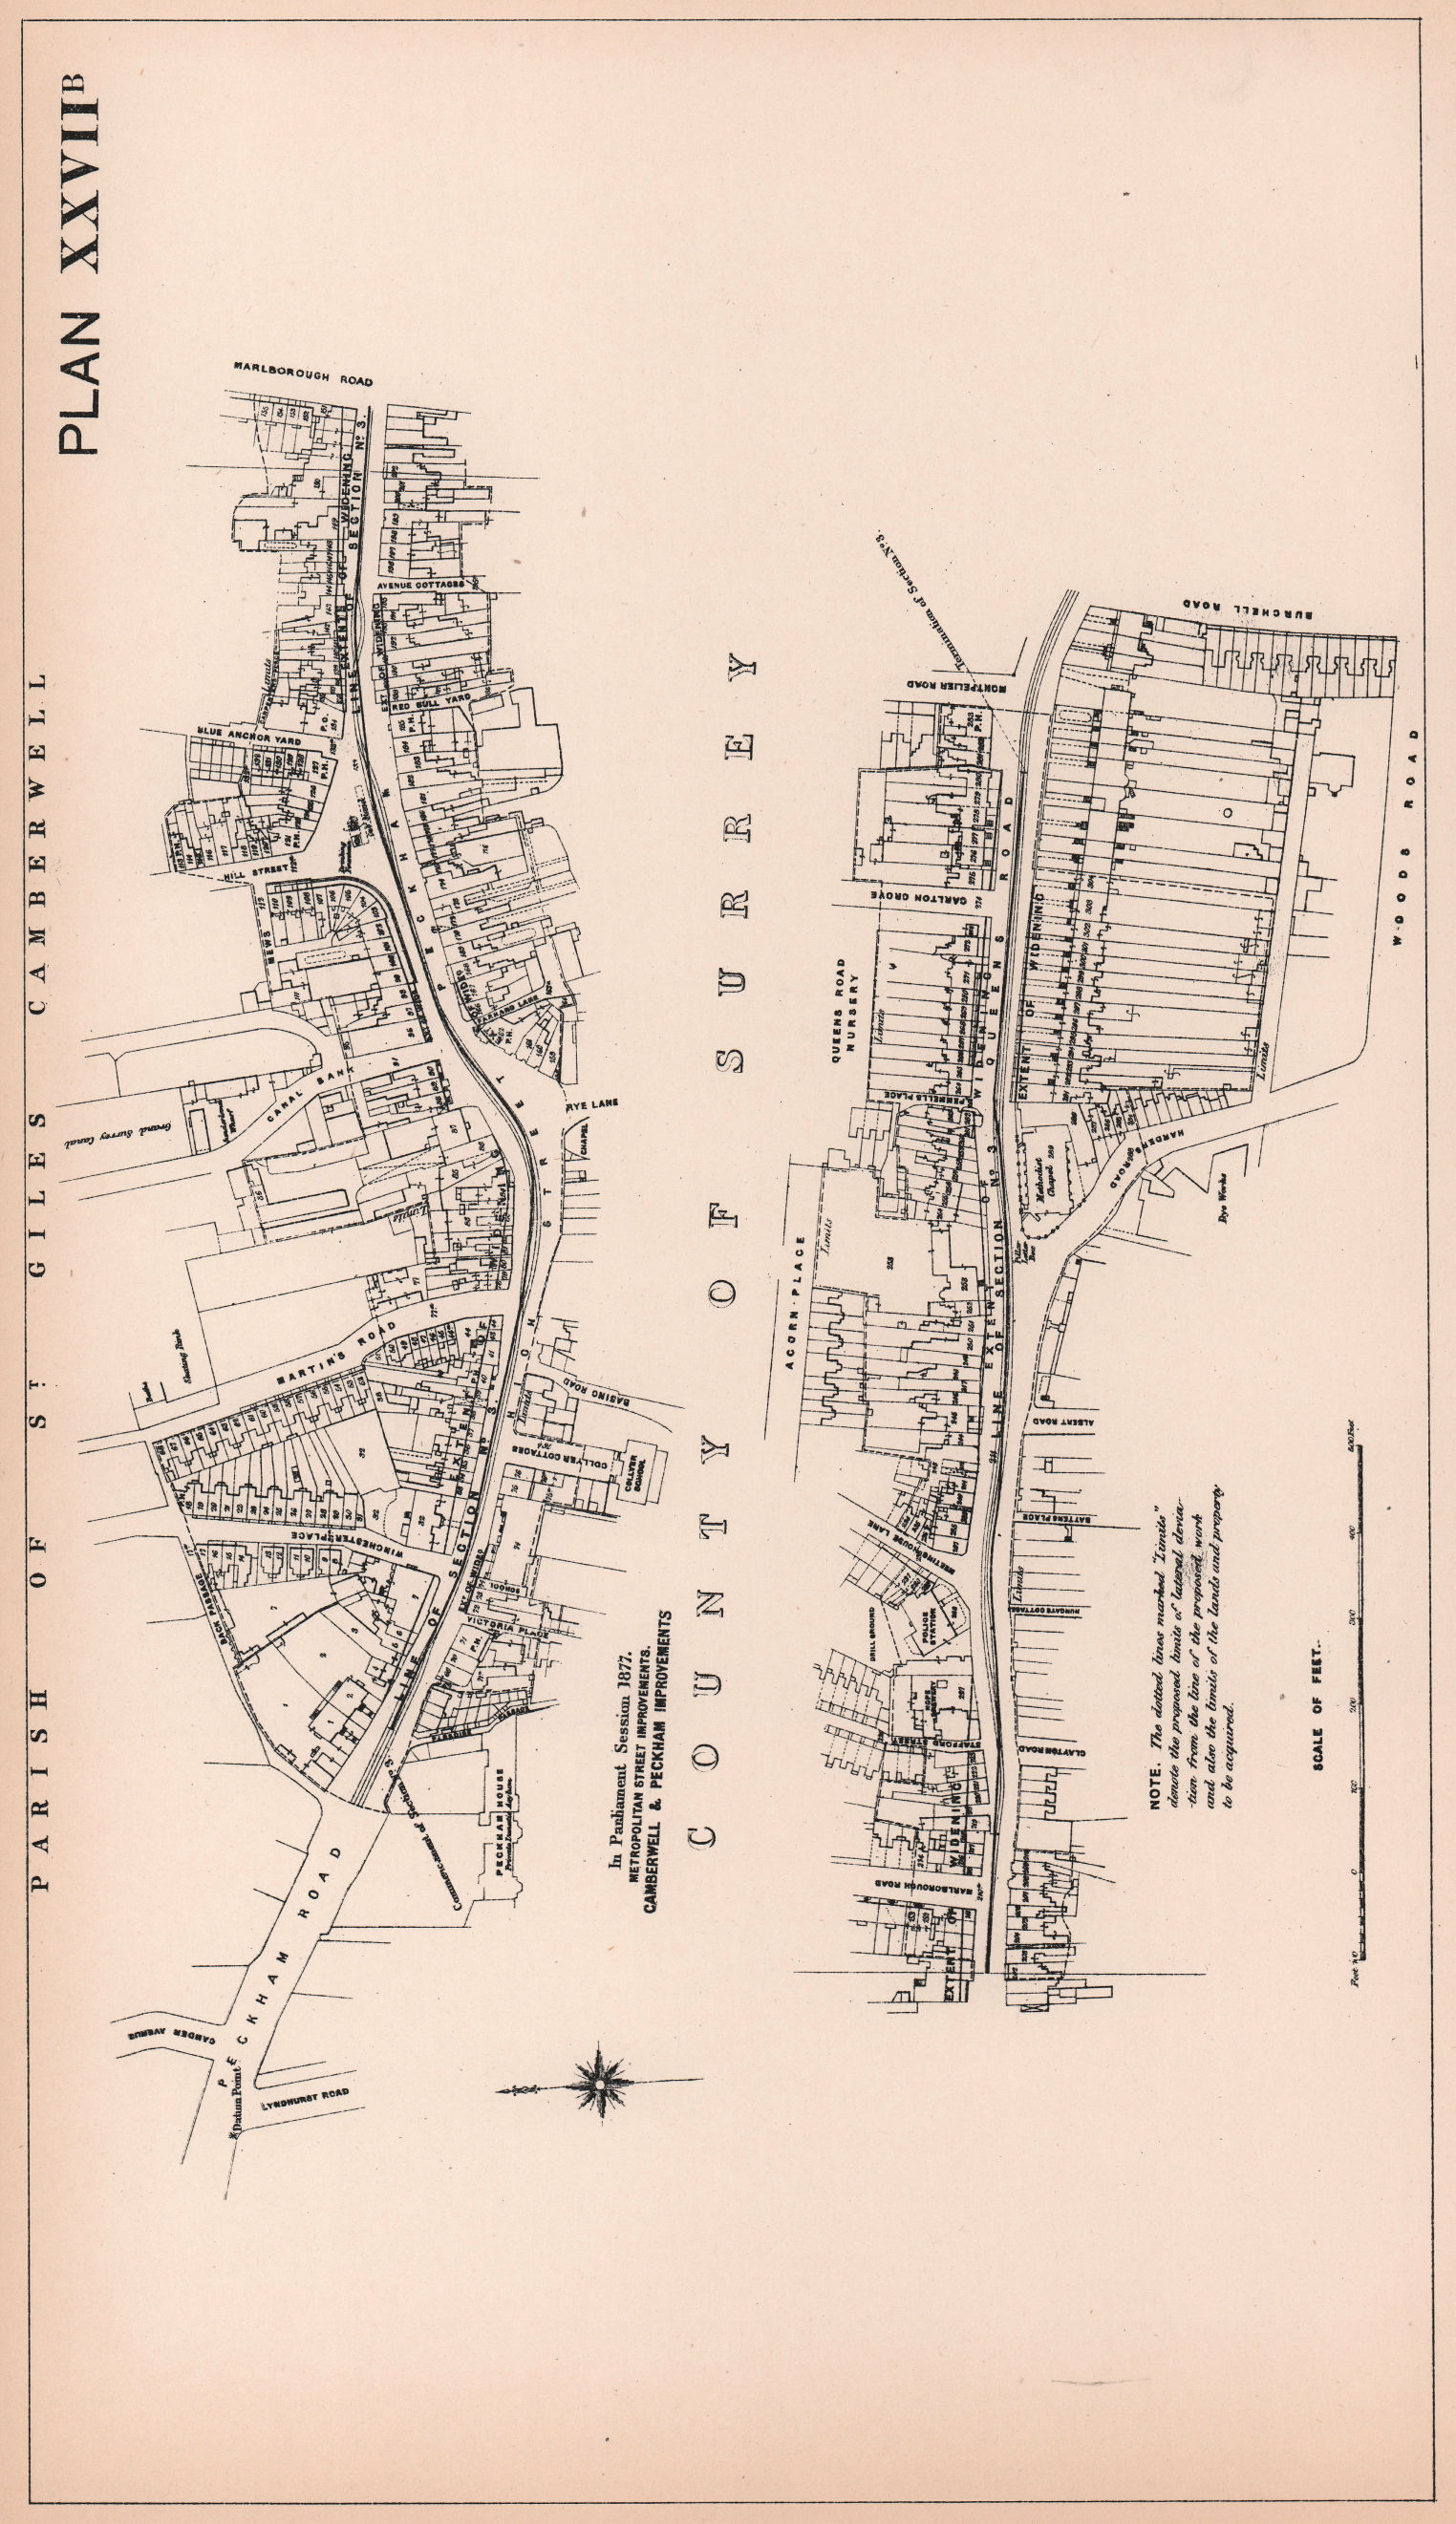 1877 Peckham High Street widening. Lyndhurst Road - Queen's Road 1898 old map